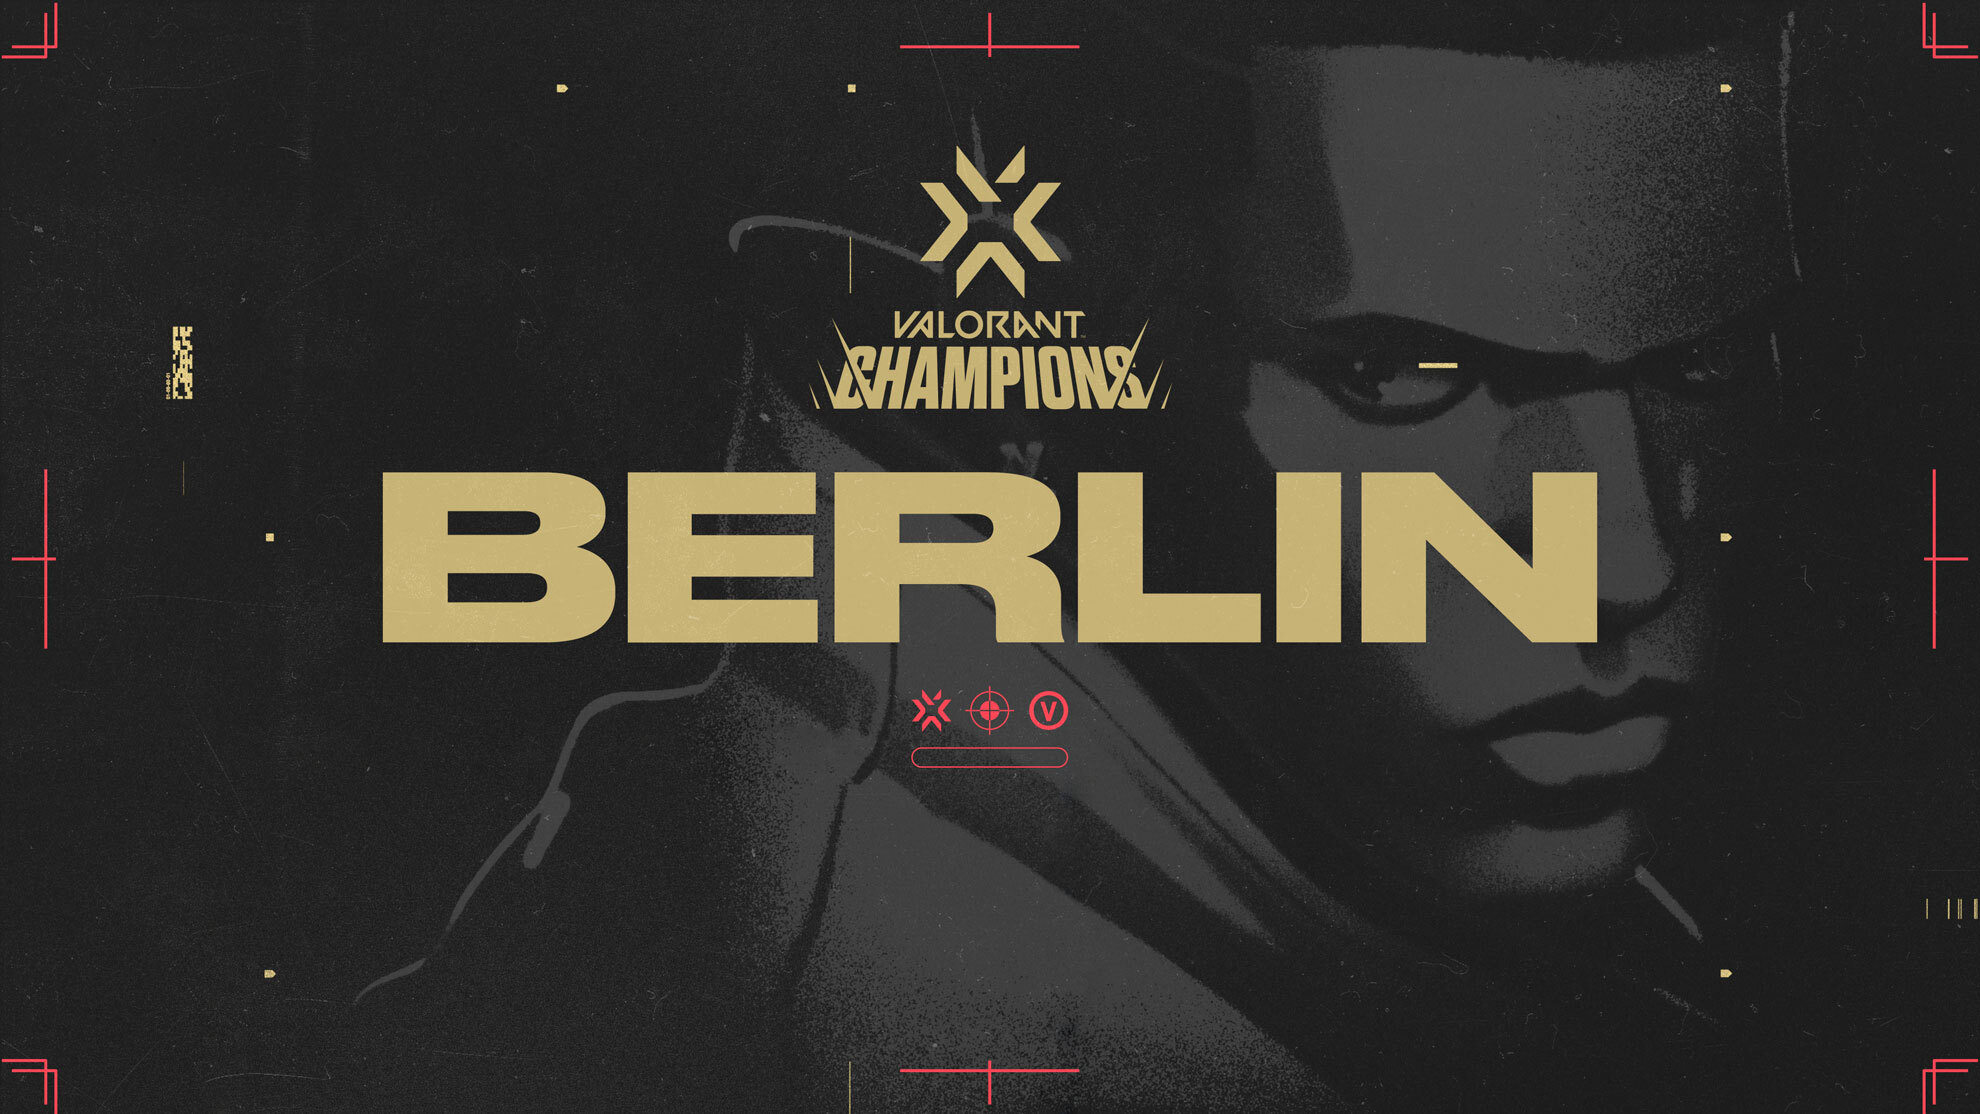 VALORANT Champions Returns to Berlin!